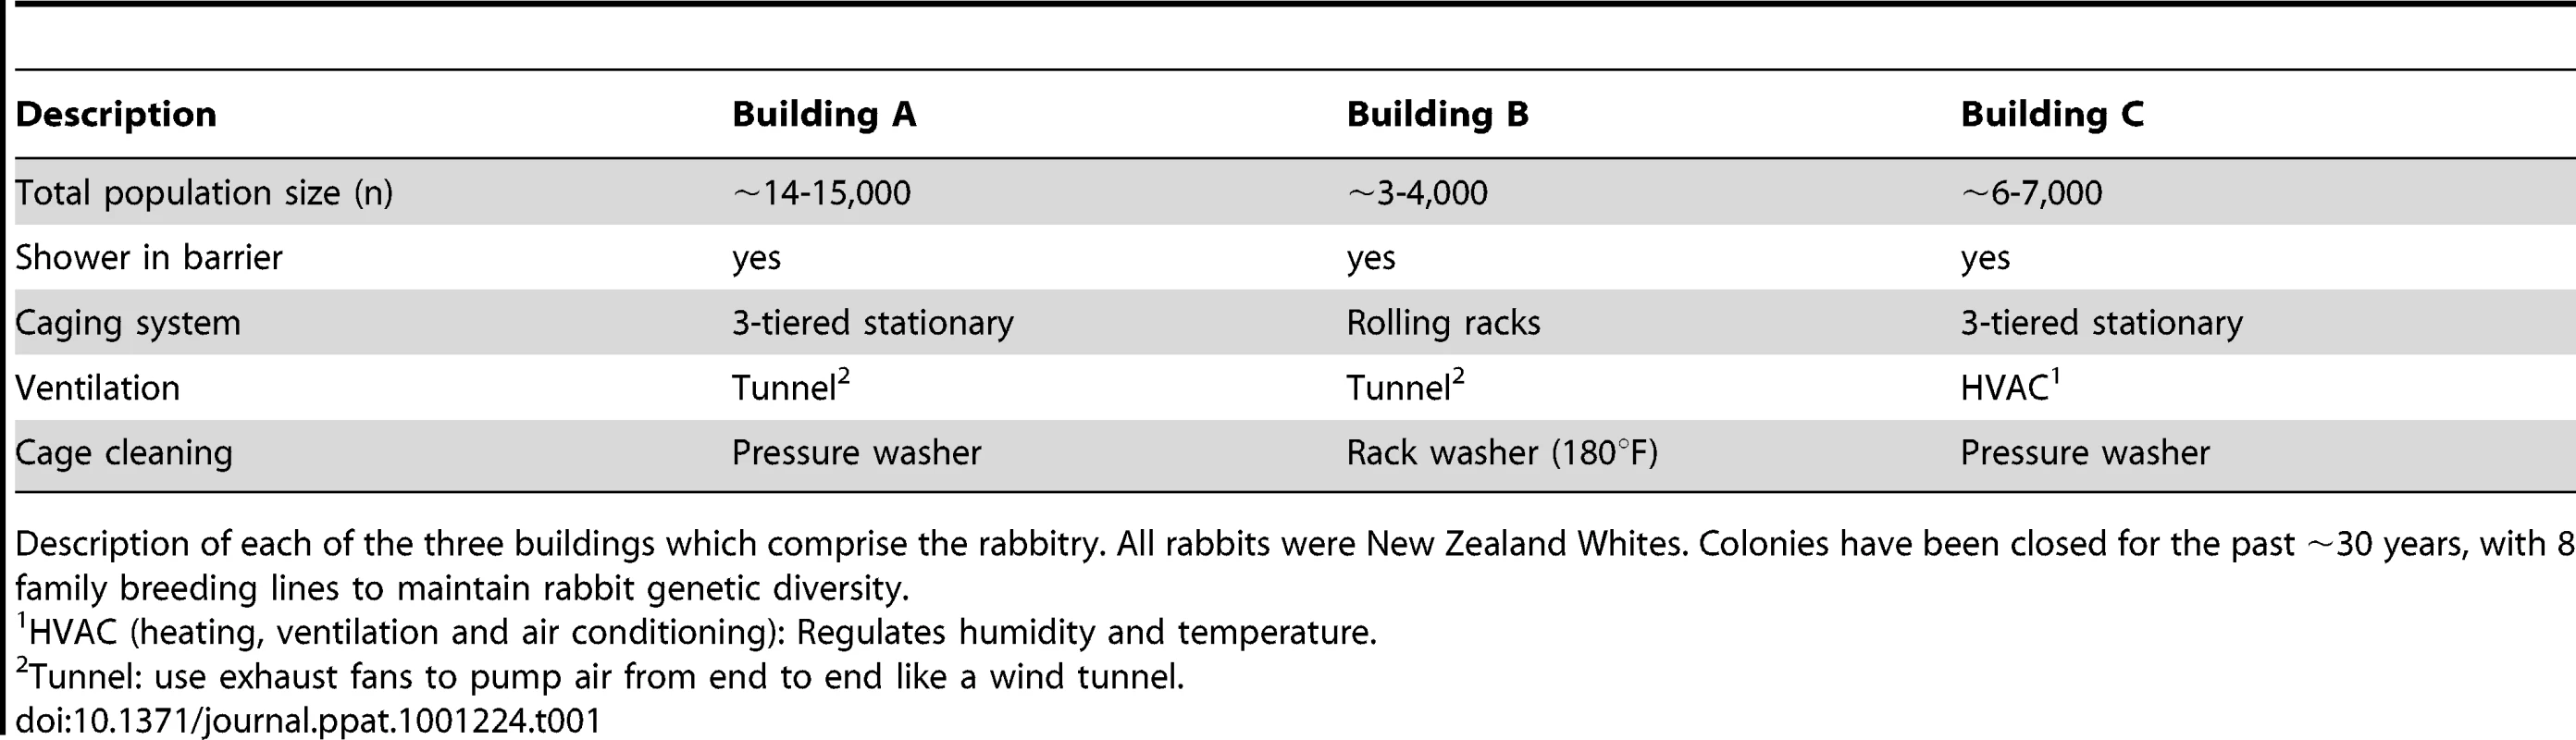 Rabbitry Buildings.